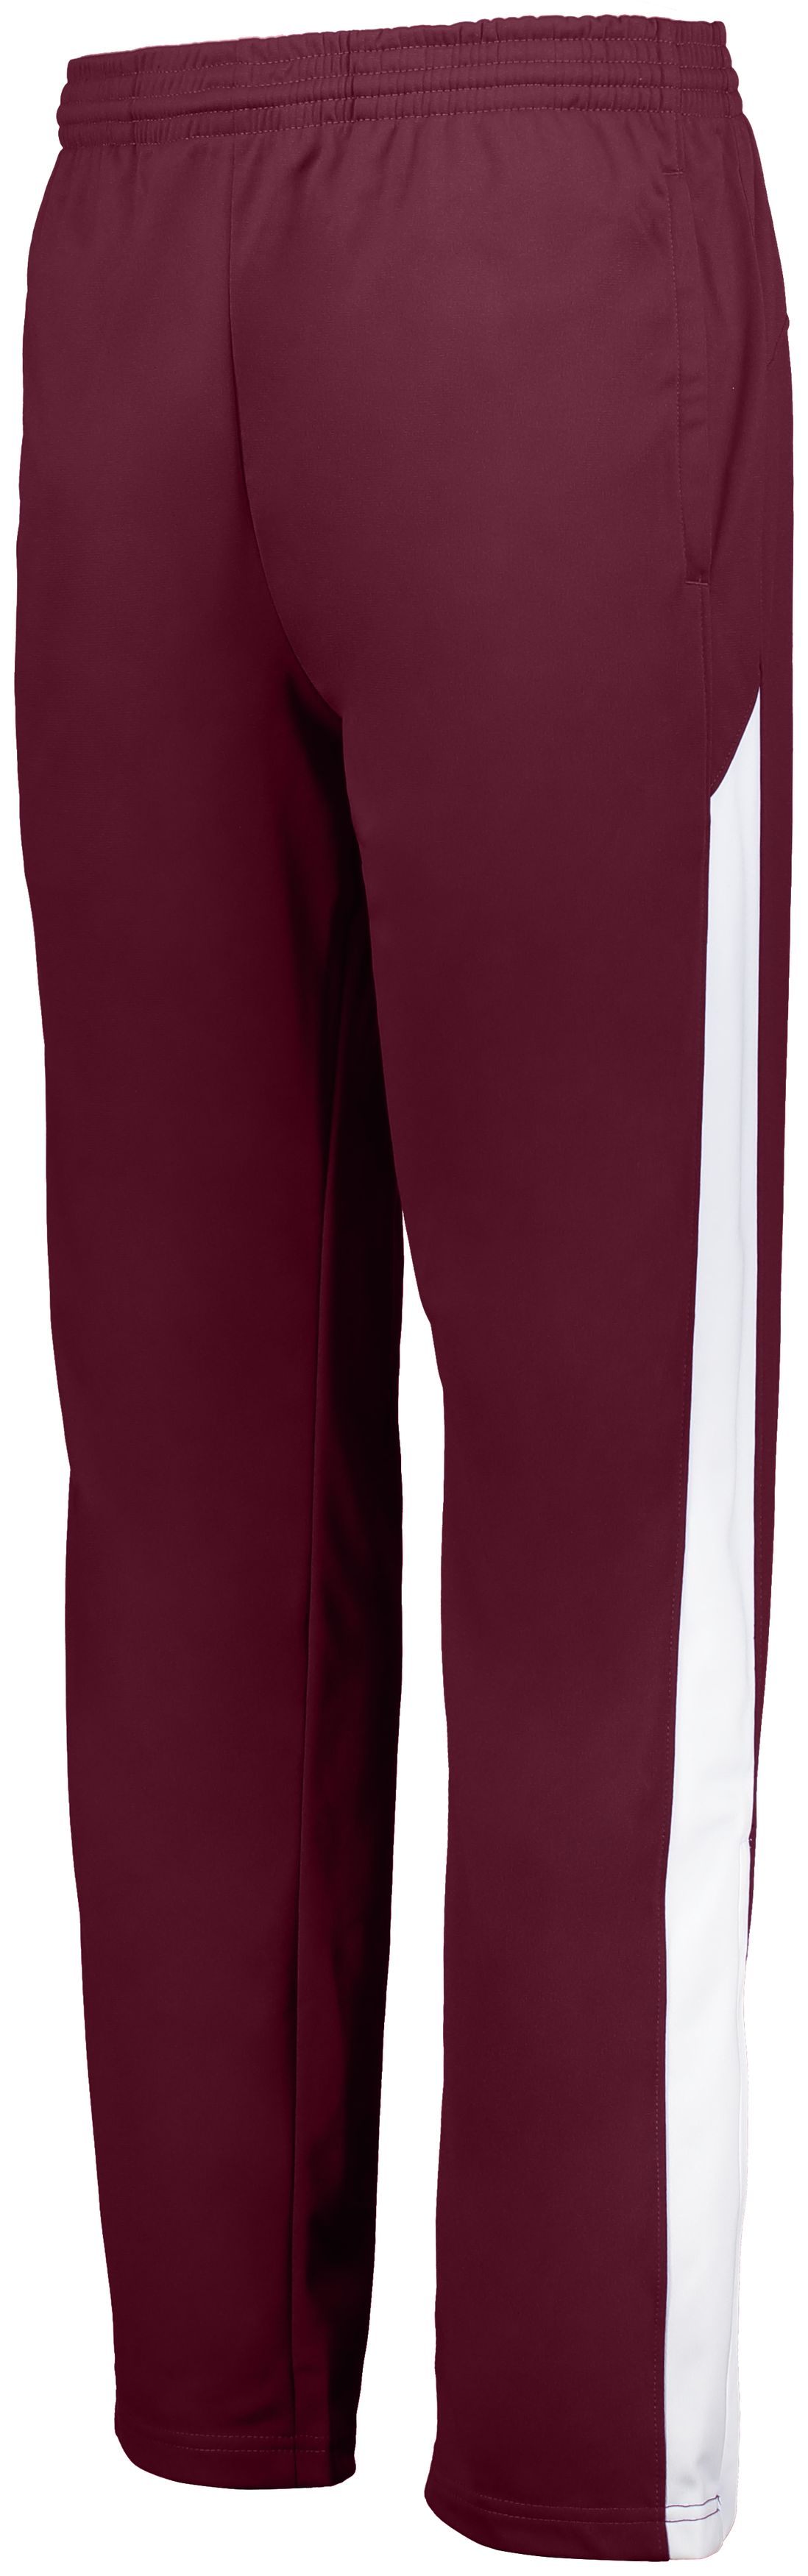 Senita Athletics Solid Maroon Burgundy Active Pants Size S - 51